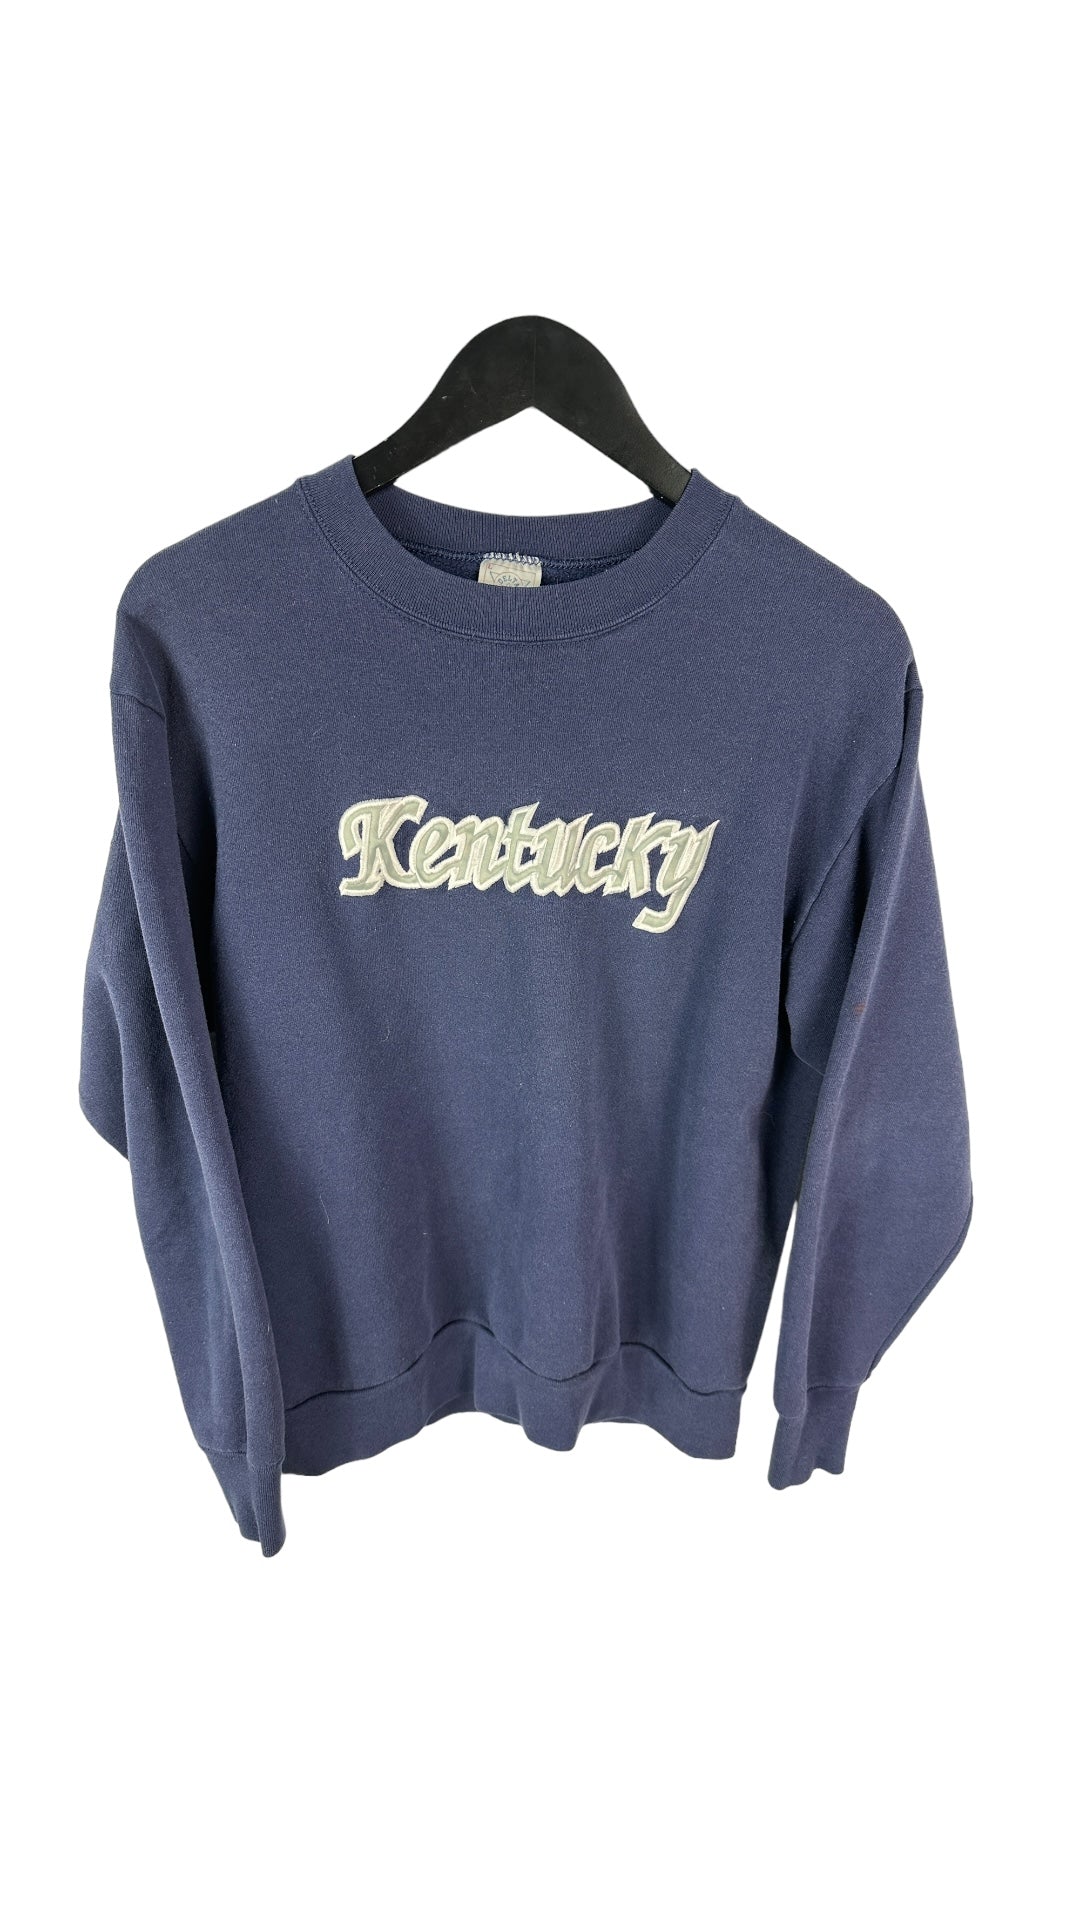 VTG Kentucky Embroidered Sweater Sz Med